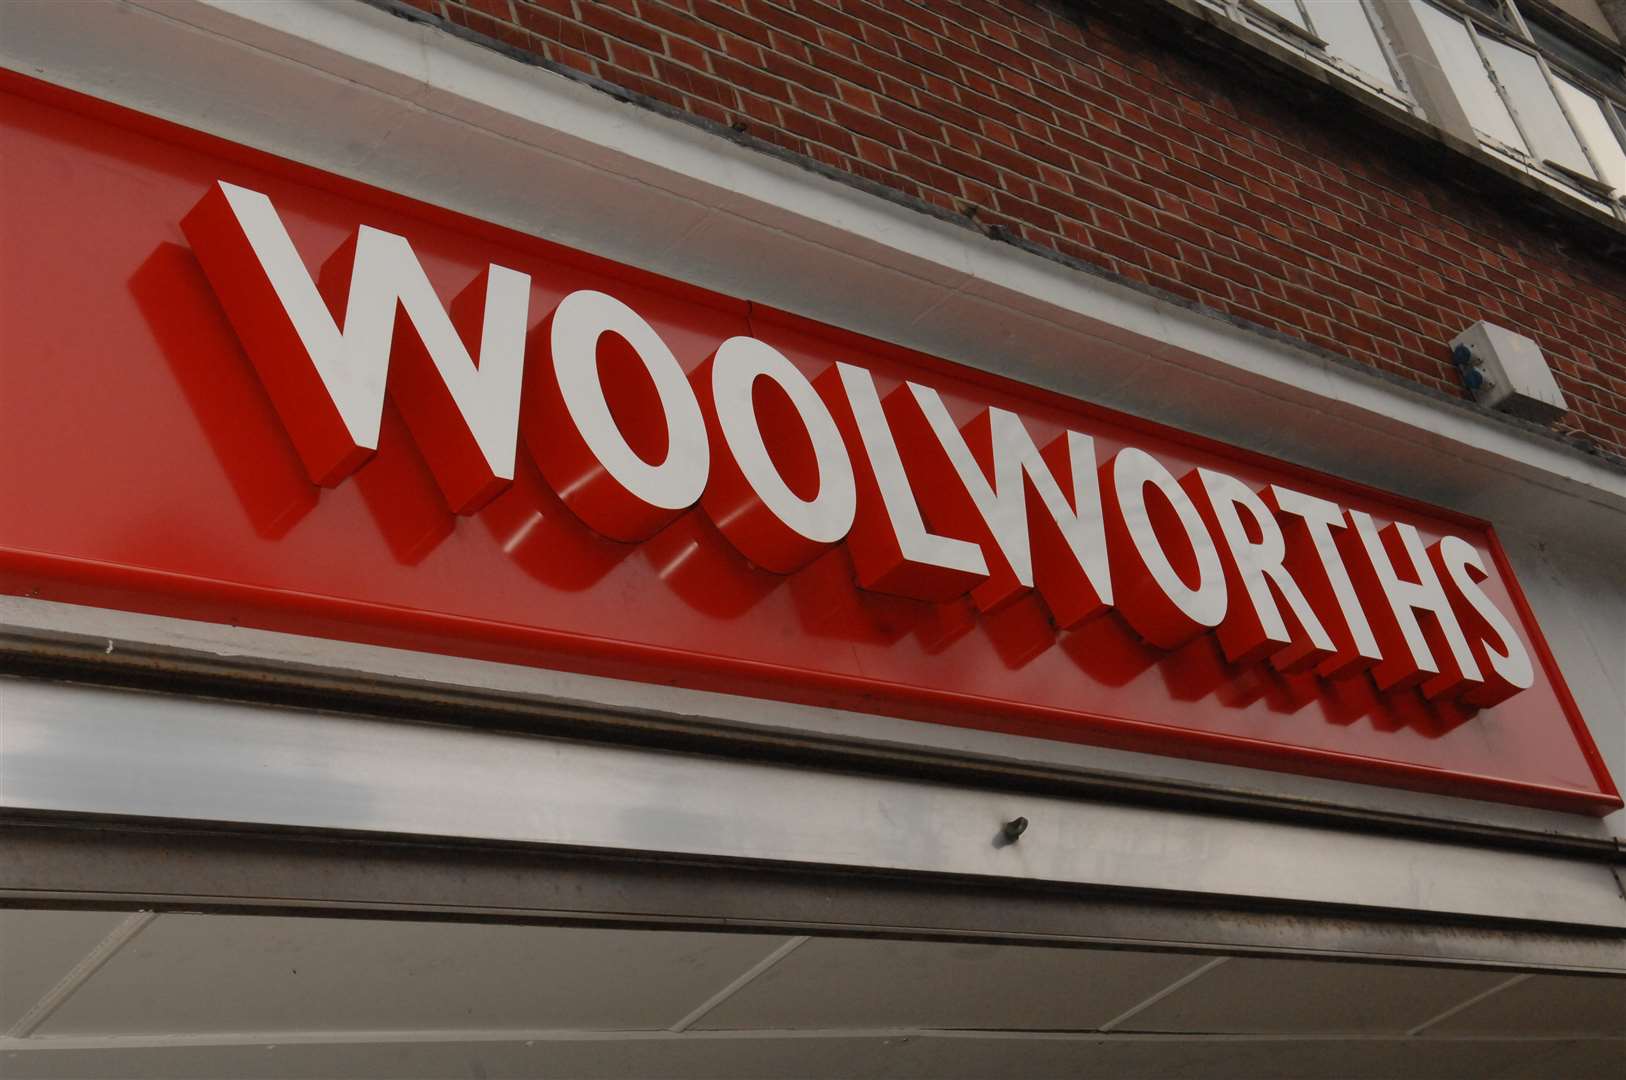 Woolworths in Gravesend